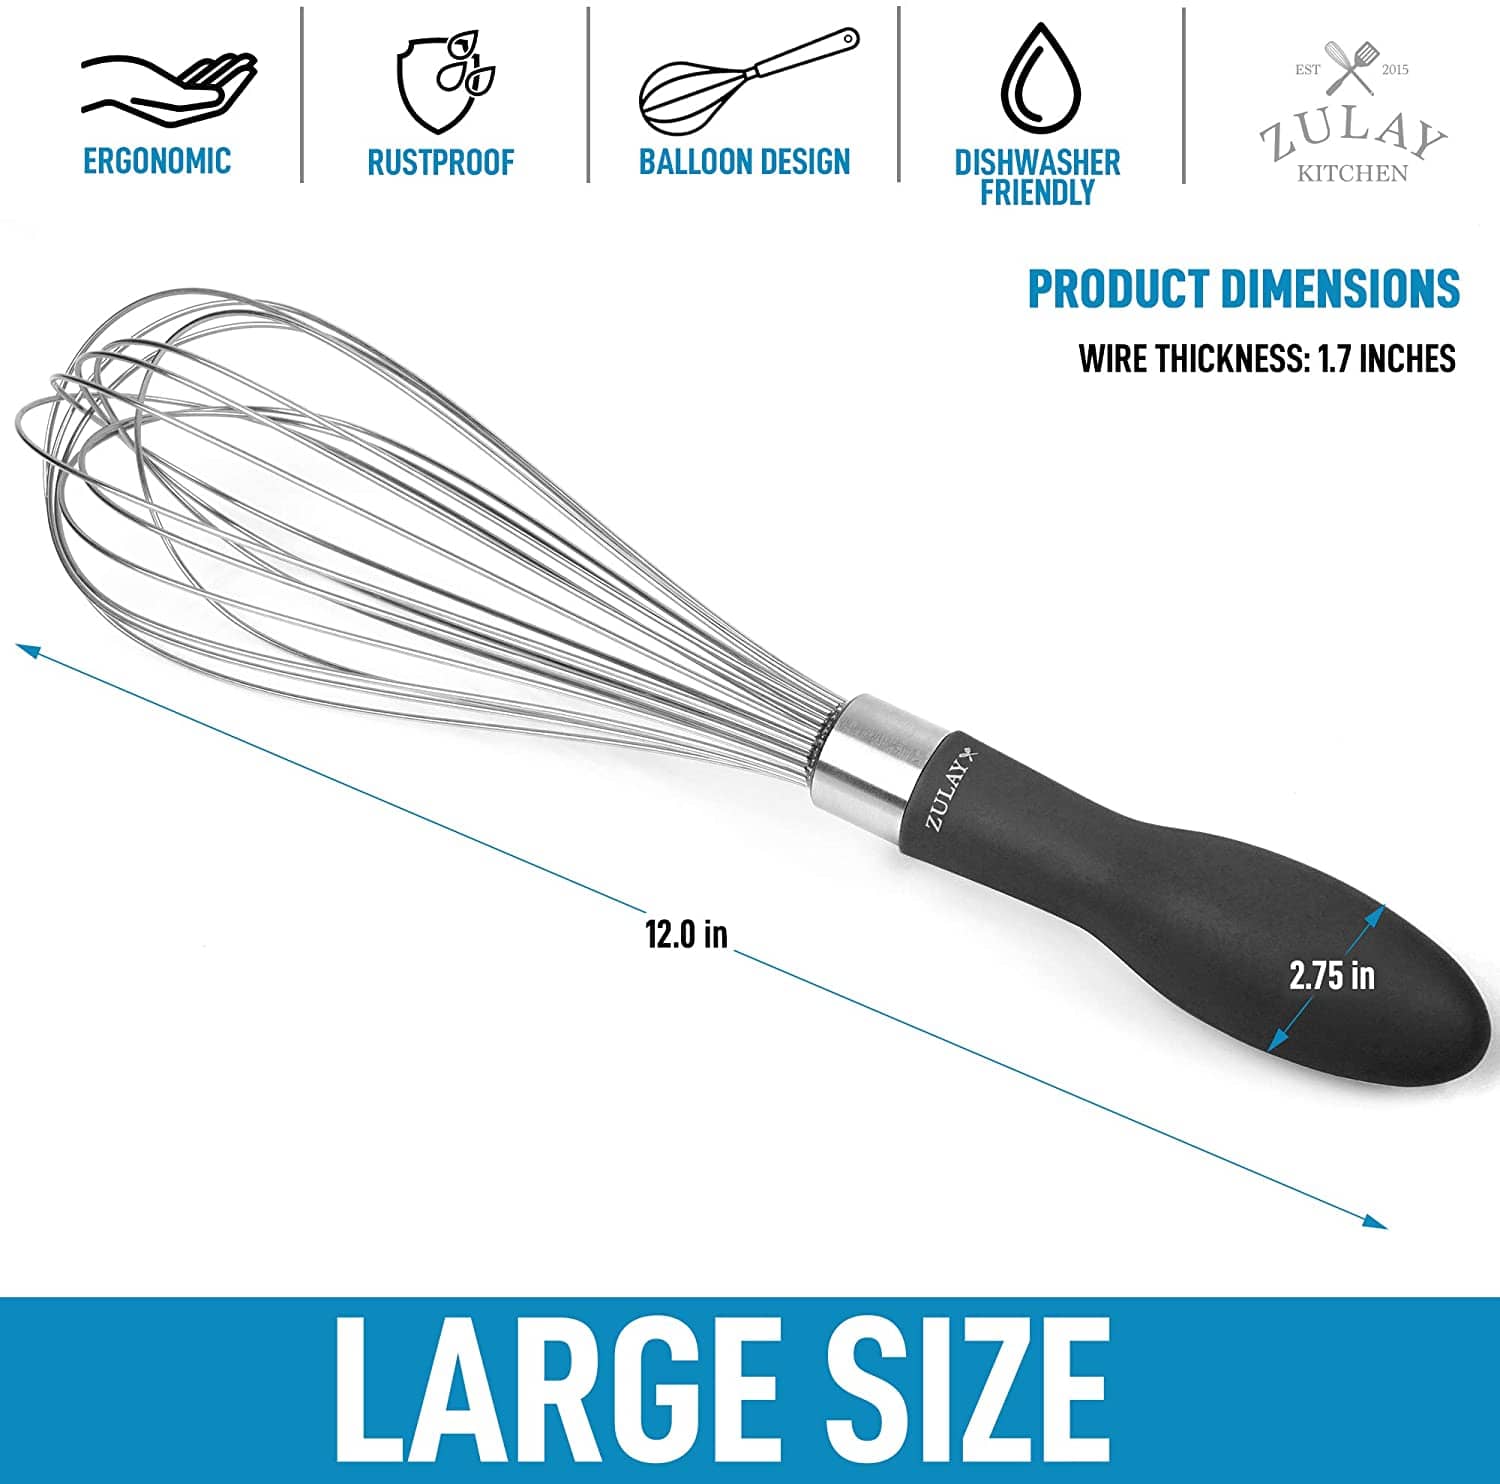 Zulay Kitchen Magnetic Measuring Spoons Set of 8 - Black, 1 - Kroger